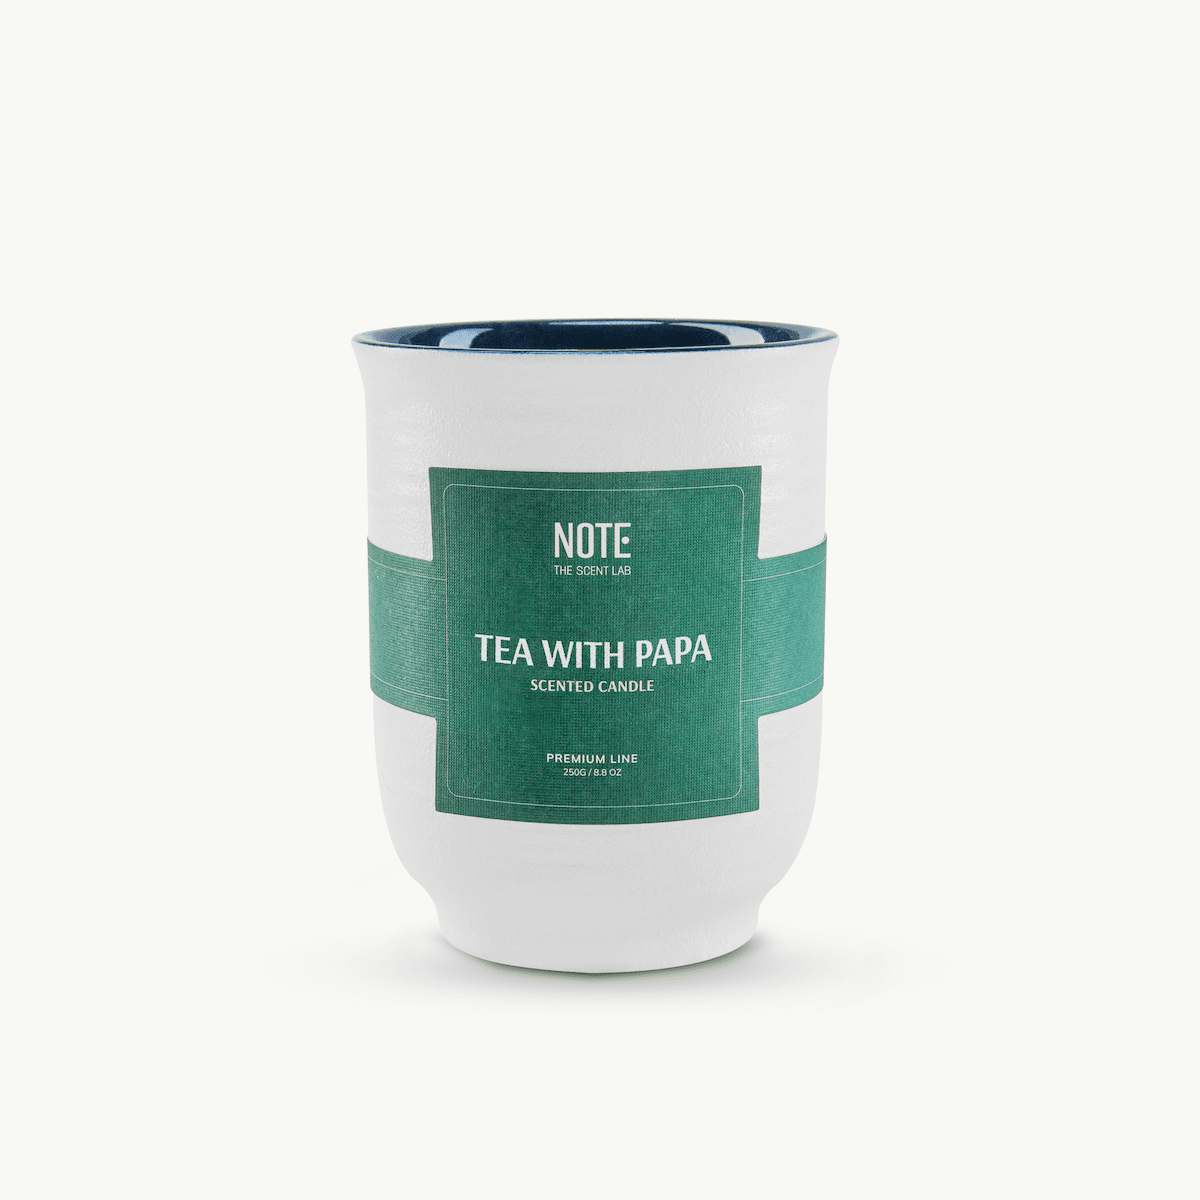 NẾN THƠM TEA WITH PAPA | PREMIUM SCENTED CANDLE - sản phẩm mùi hương từ NOTE - The Scent Lab